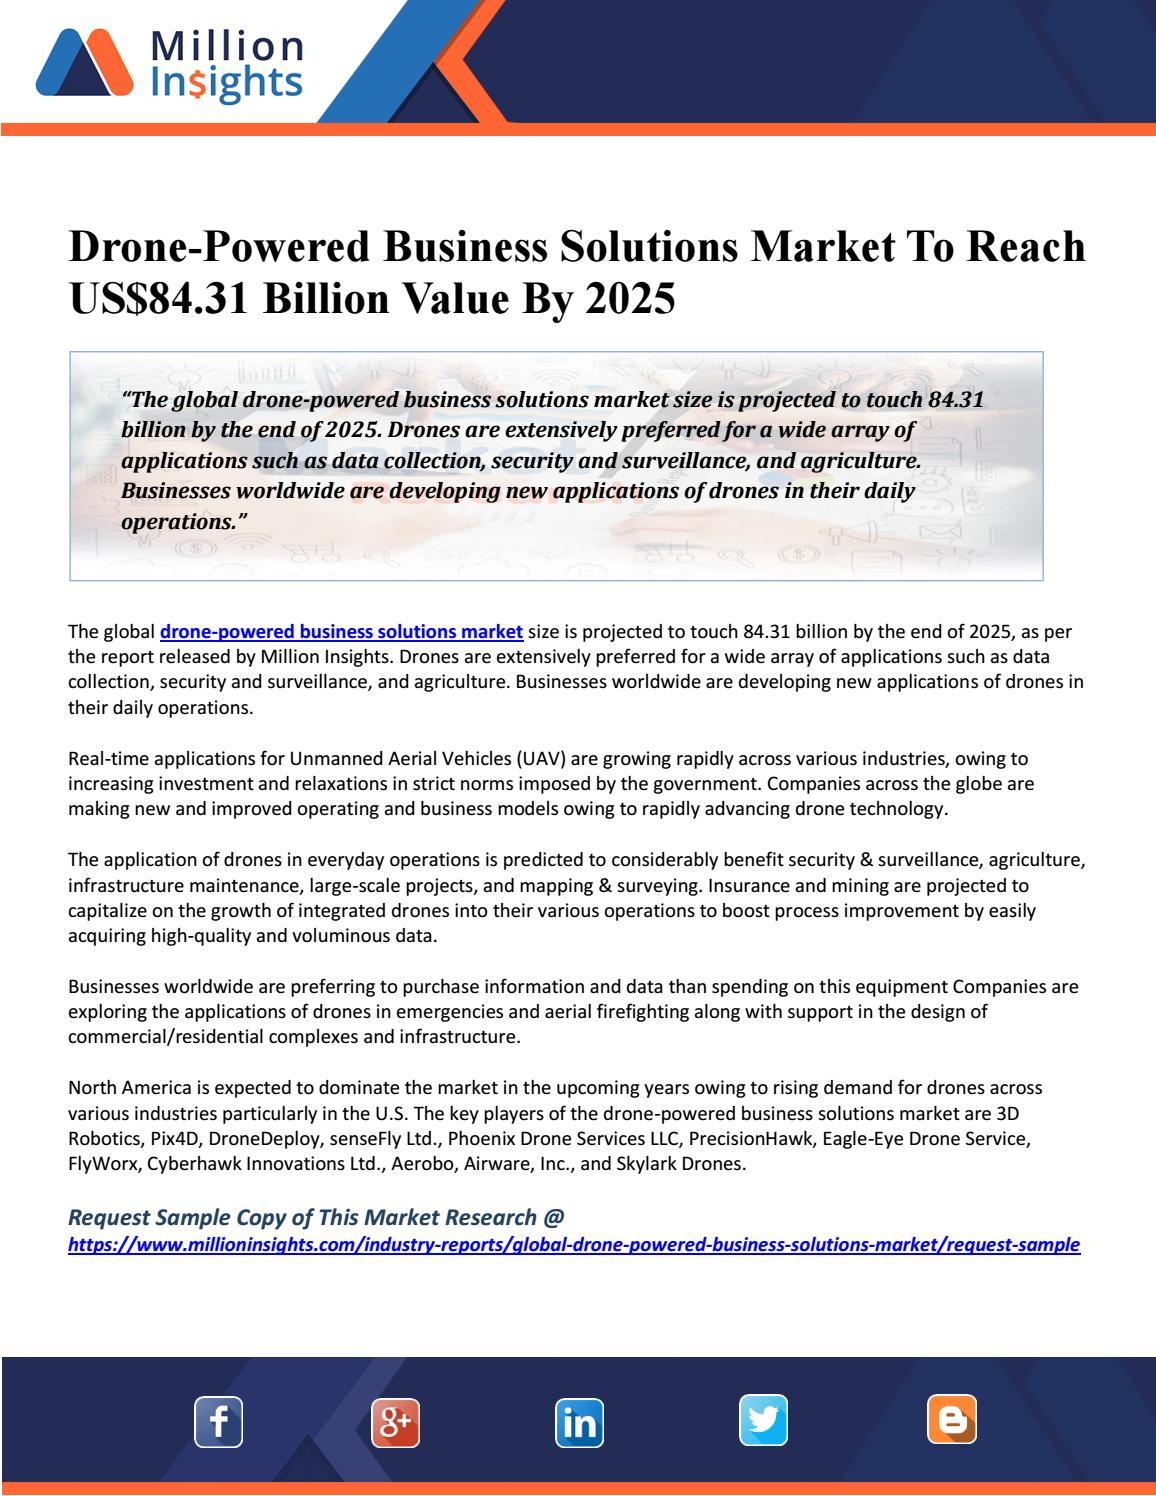 Drone-Powered Business Solutions Market is Booming Worldwide | Cyberhawk, Aerobo, Measure